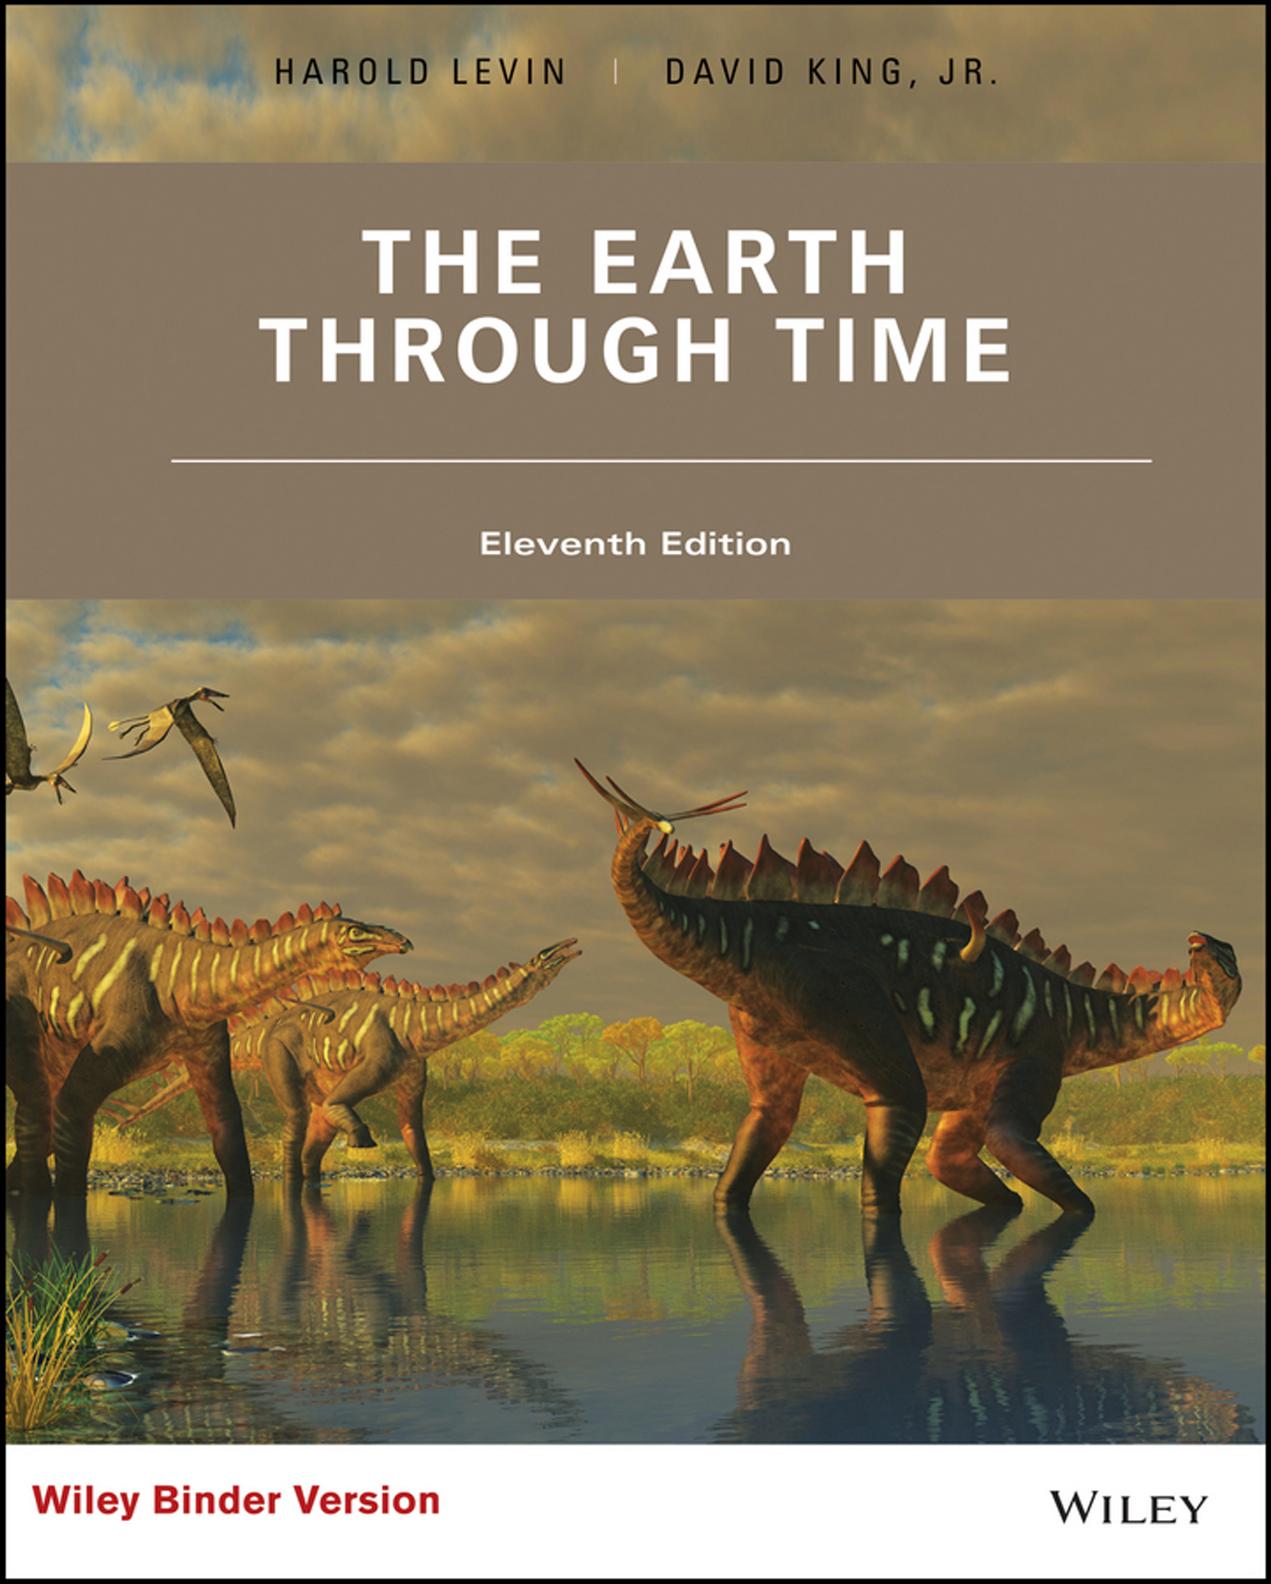 Earth Through Time, 11th Ed - Harold L. Levin, The - Harold L.Levin.jpg